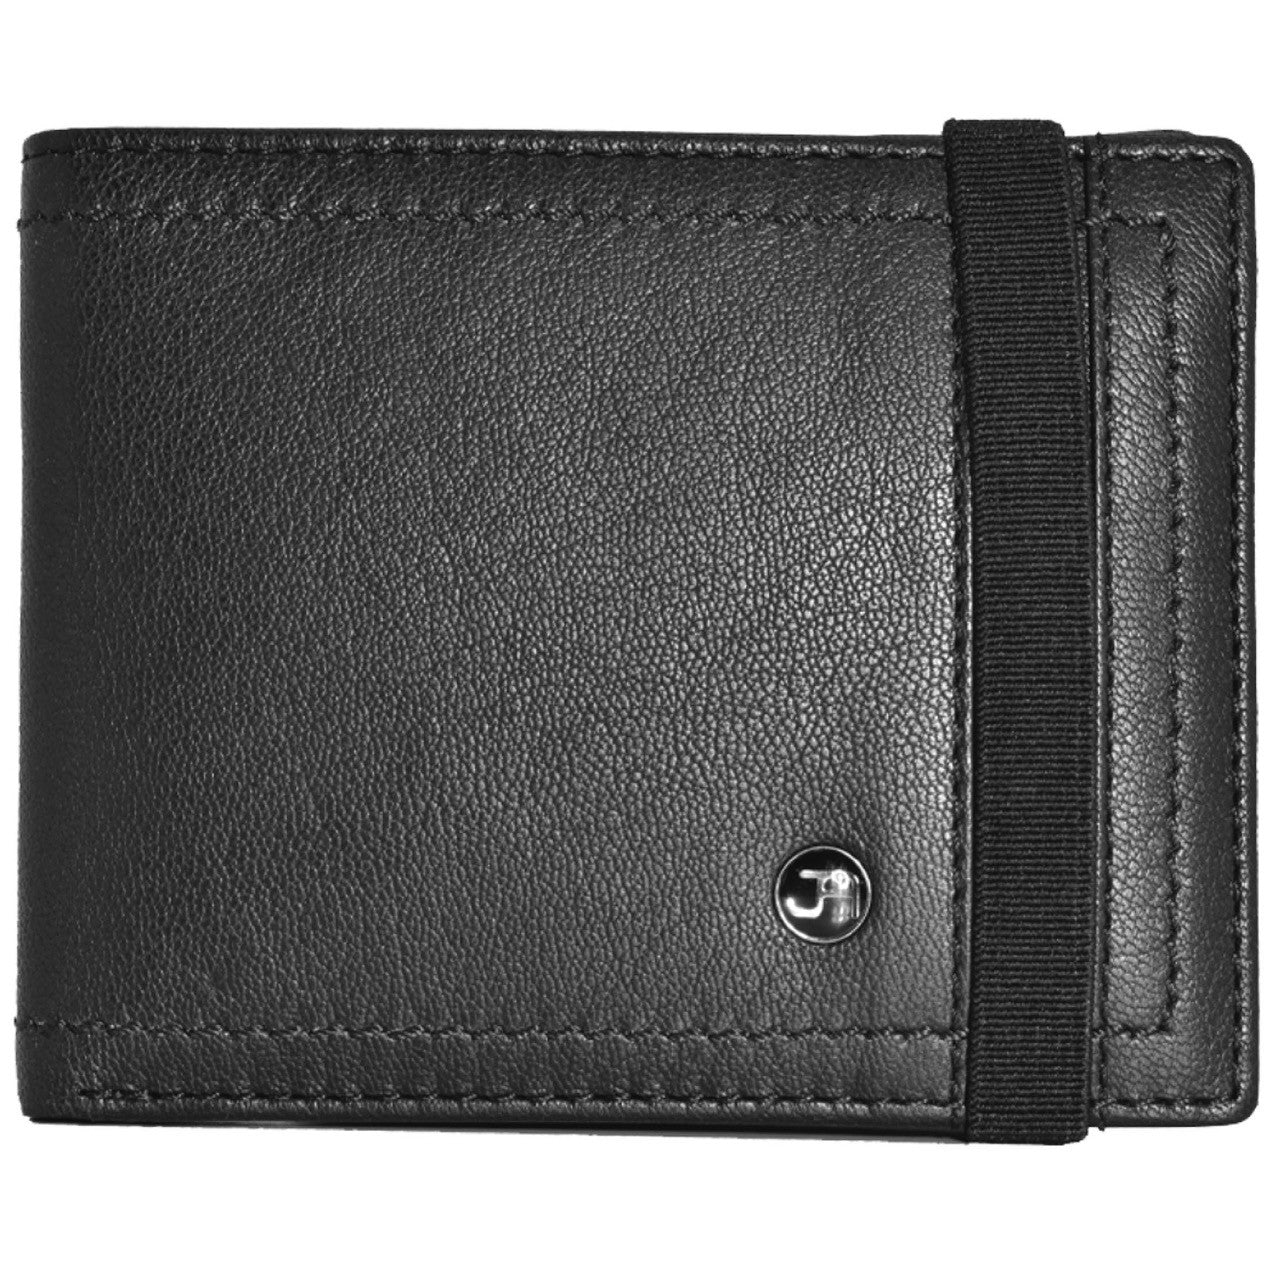 title:Jack Abrahams Bi-Fold Stylish RFID Wallet;color:Black